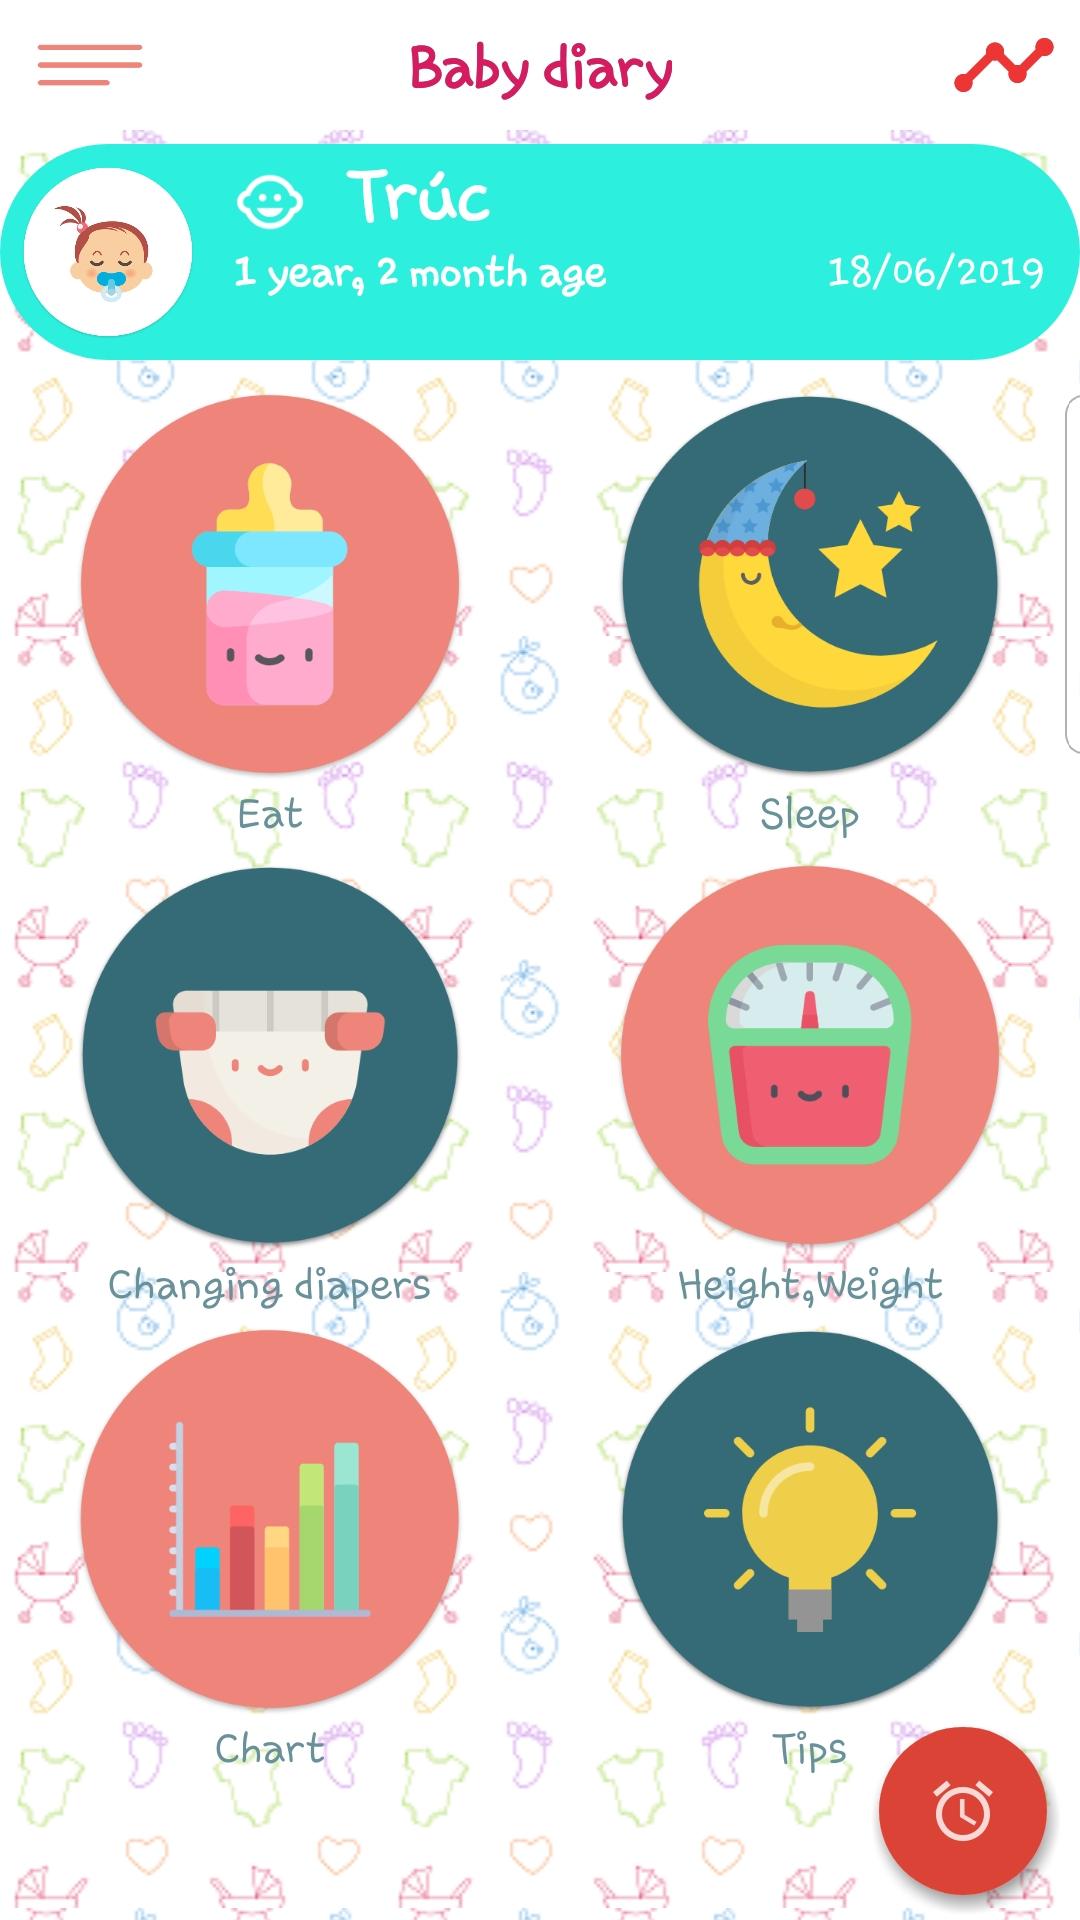 Baby Diary Feeding, Sleep and Healthy tracker 1.0 Screenshot 8